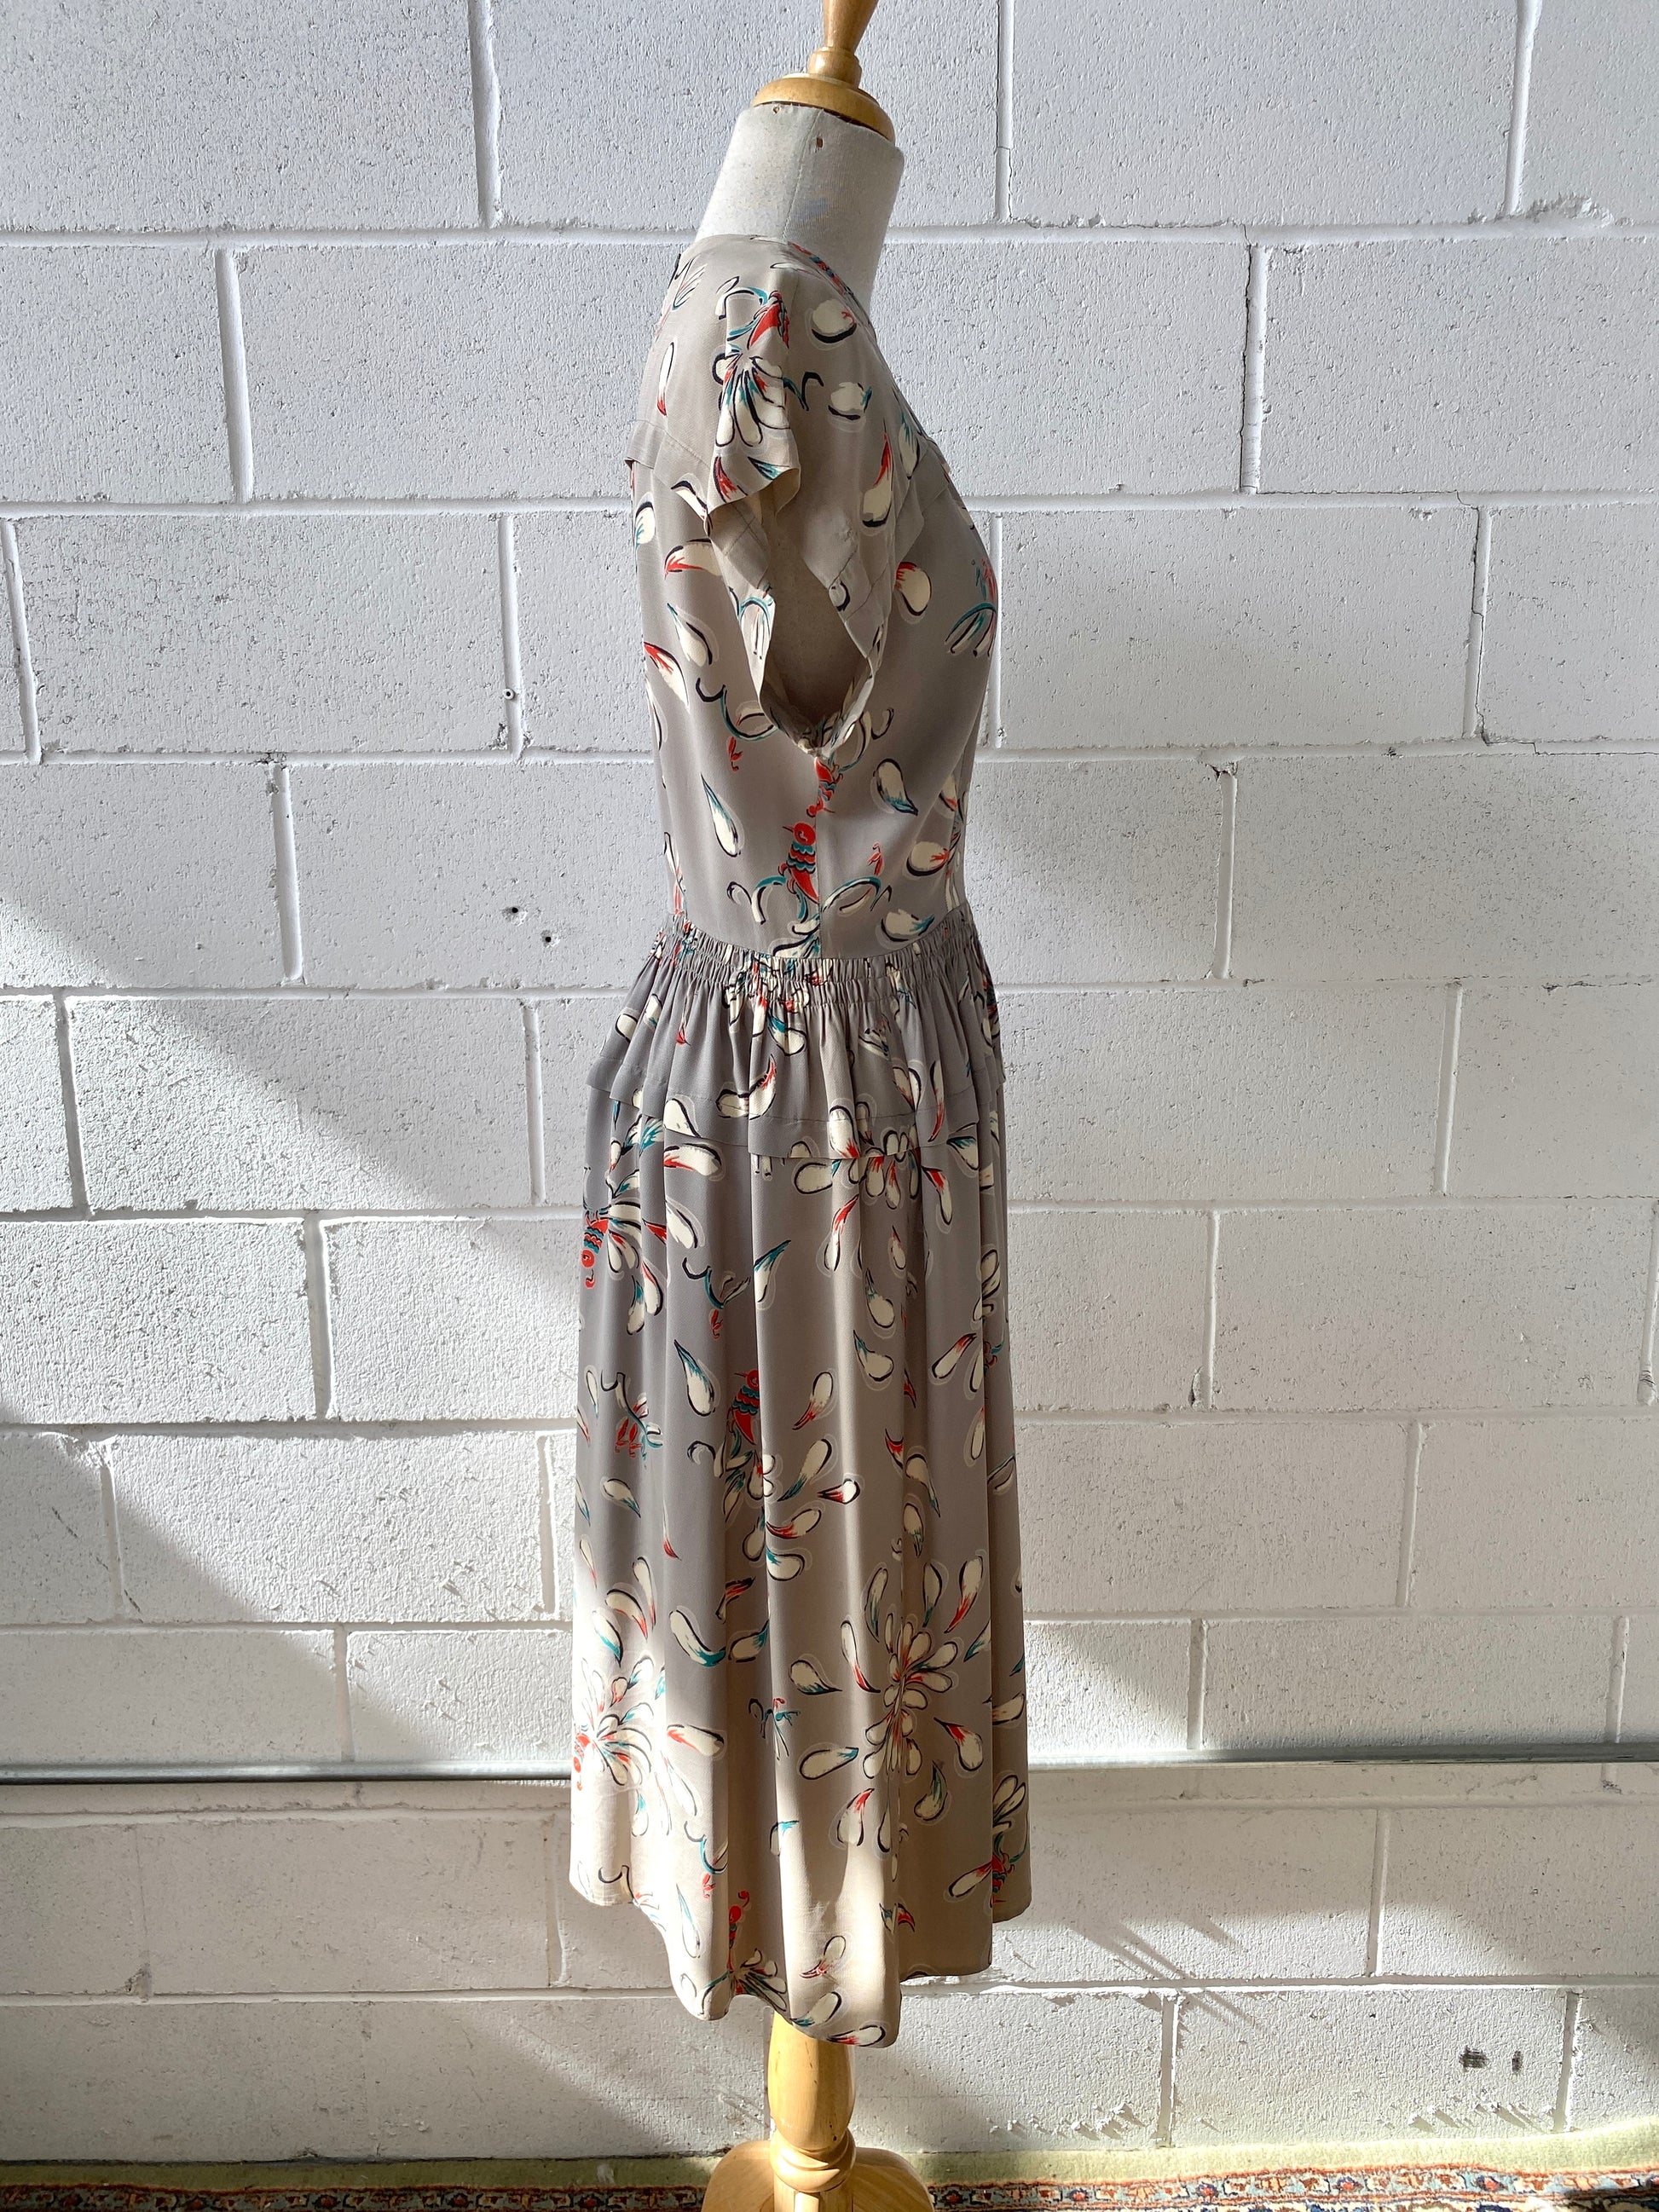 Vintage 1940s Grey Novelty Print Rayon Day Dress, B36"